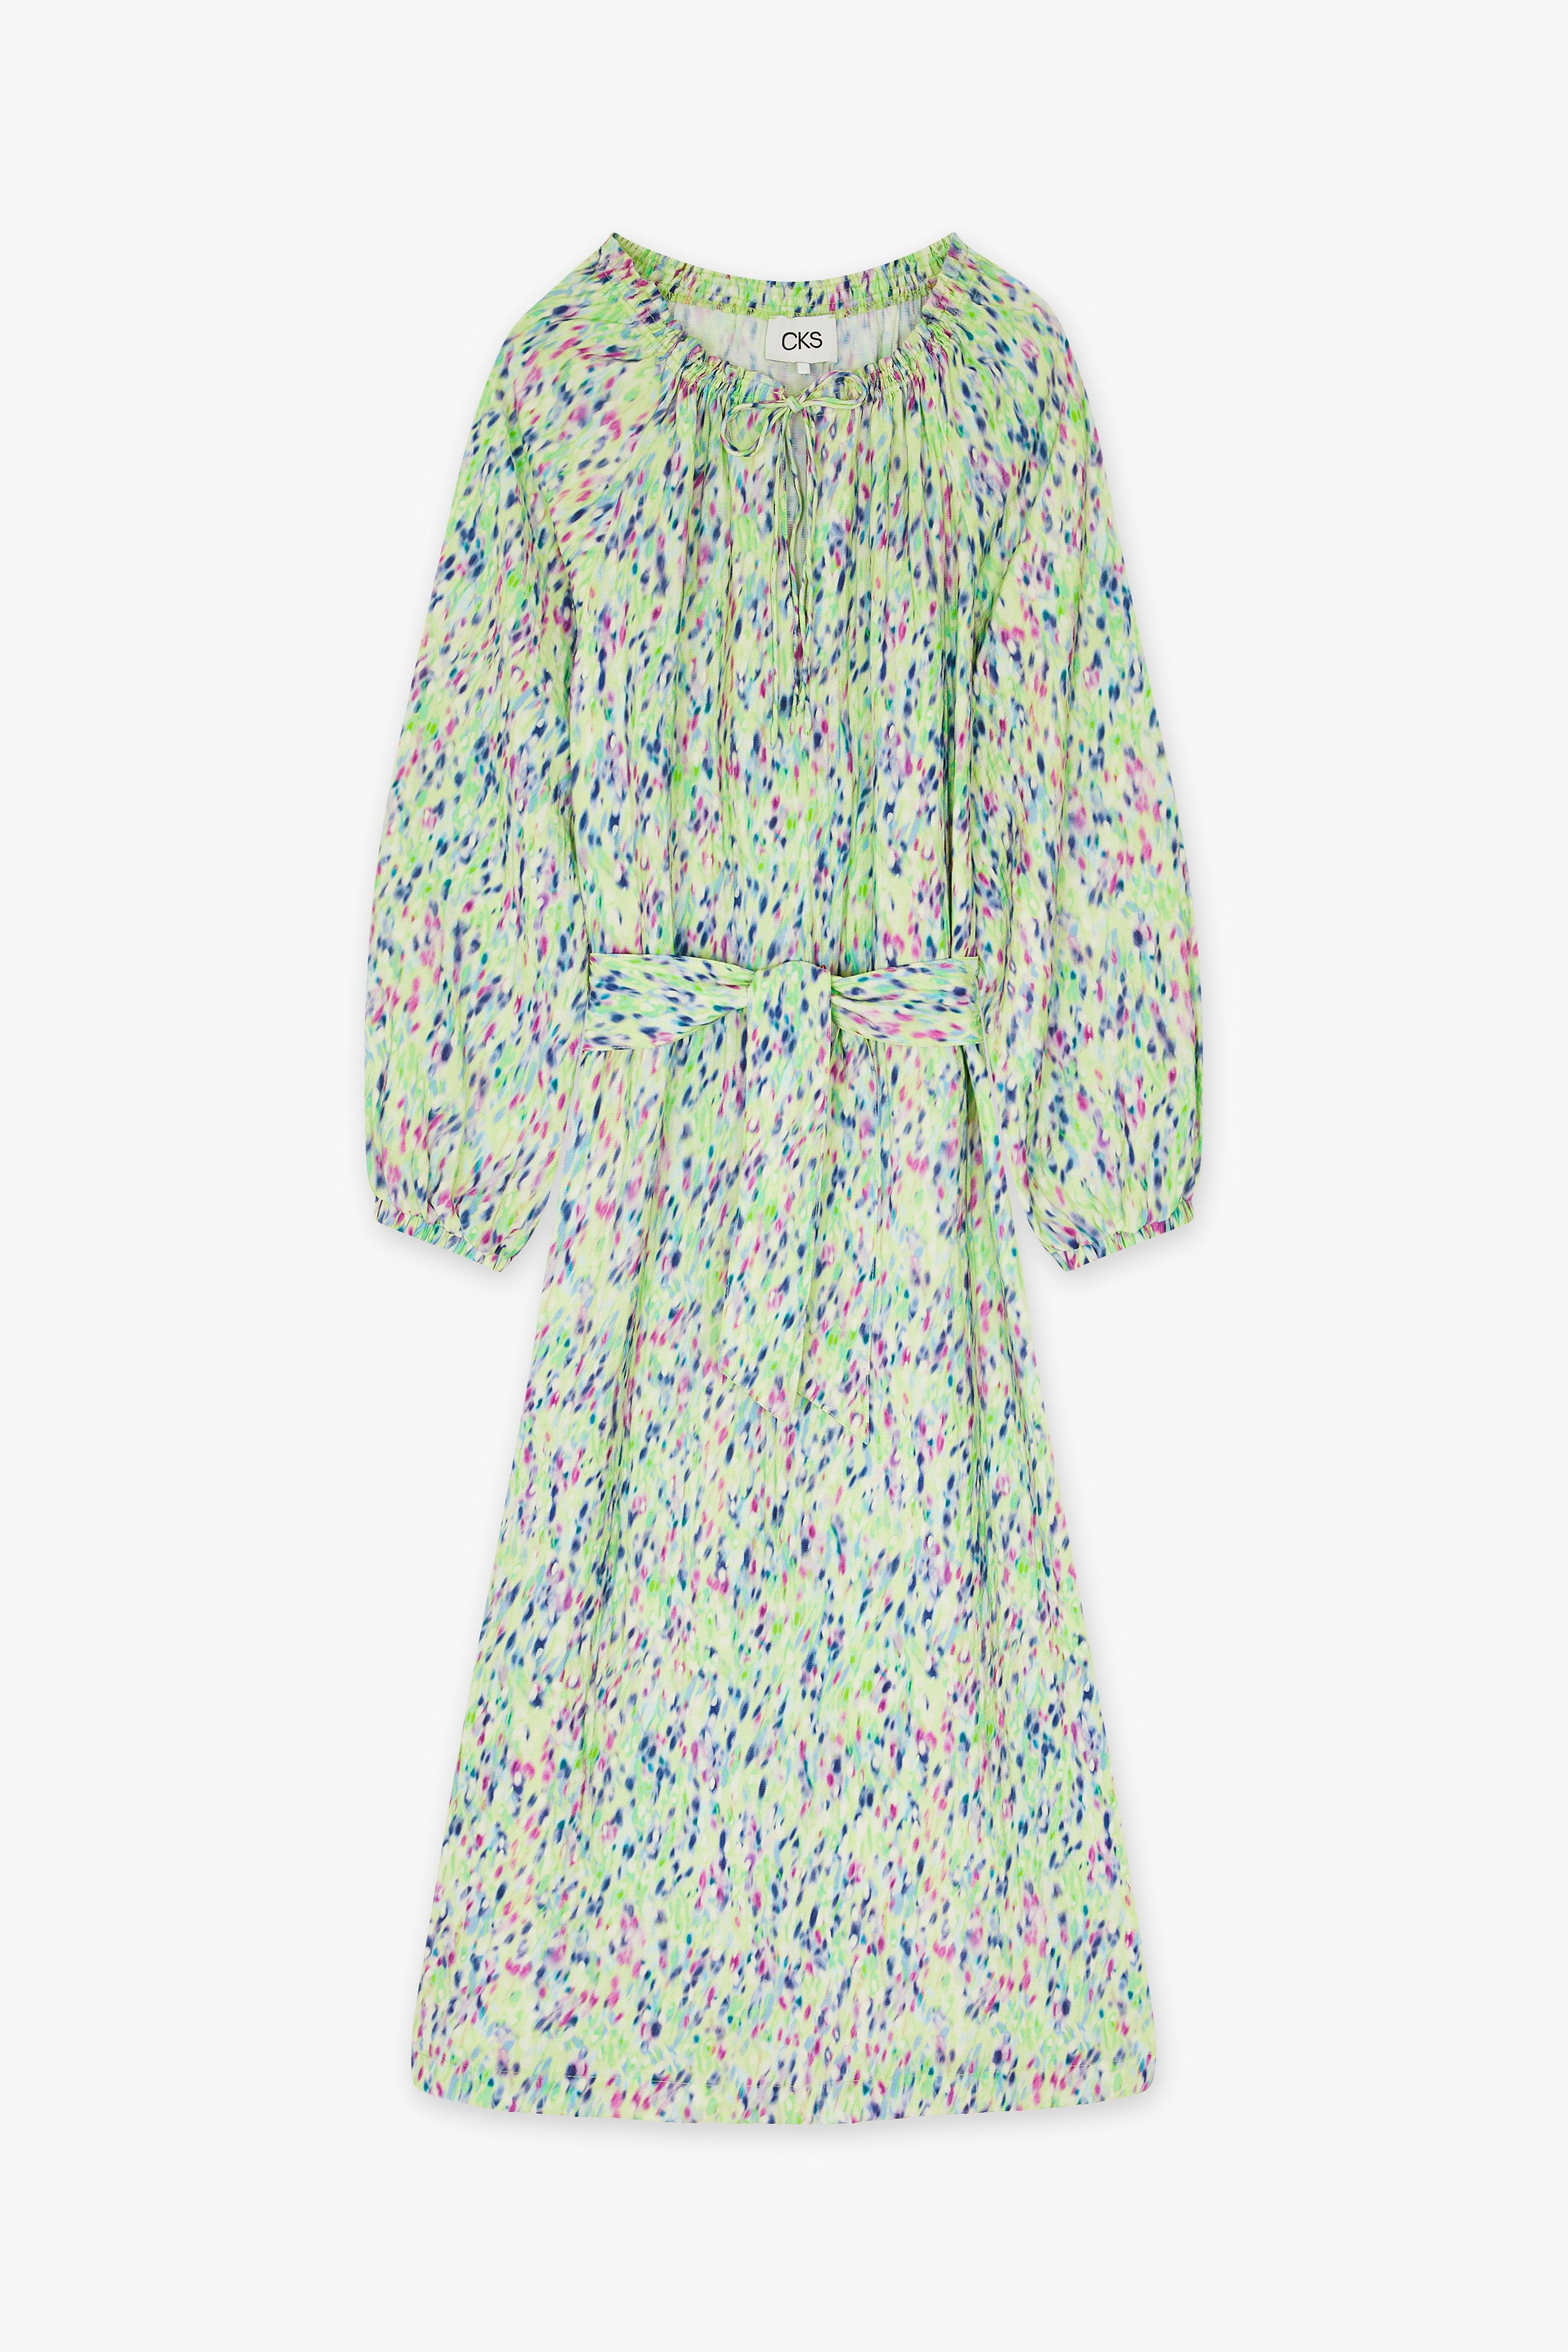 Cks fashion Green Abstract Print Dala Midi Dress